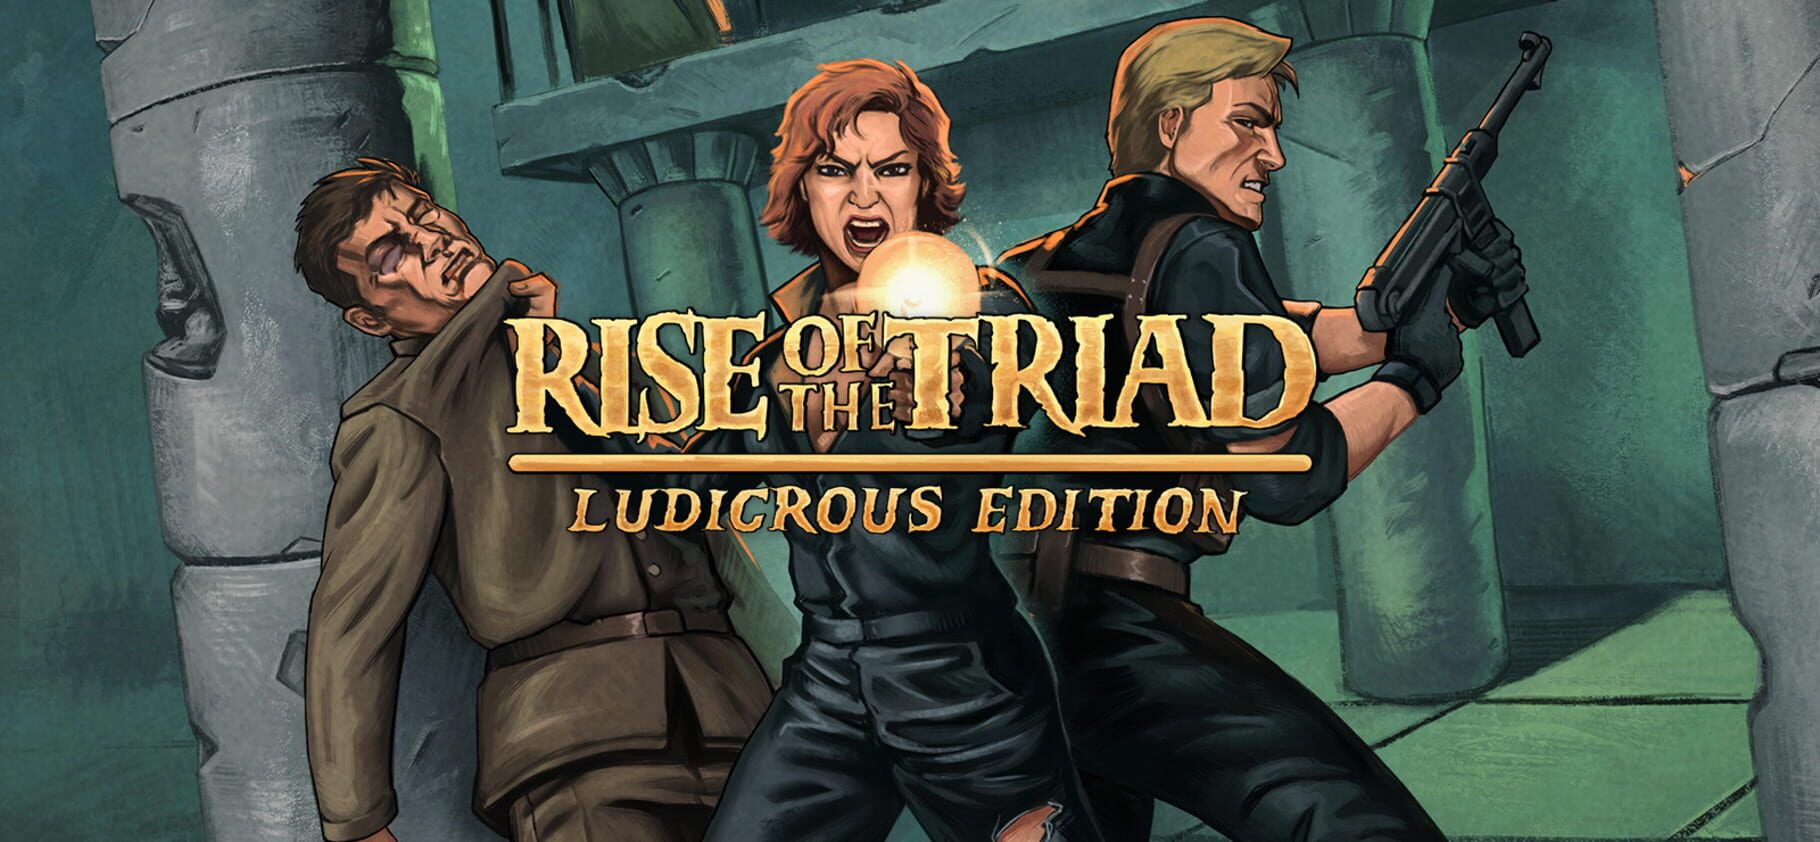 Arte - Rise of the Triad: Ludicrous Edition